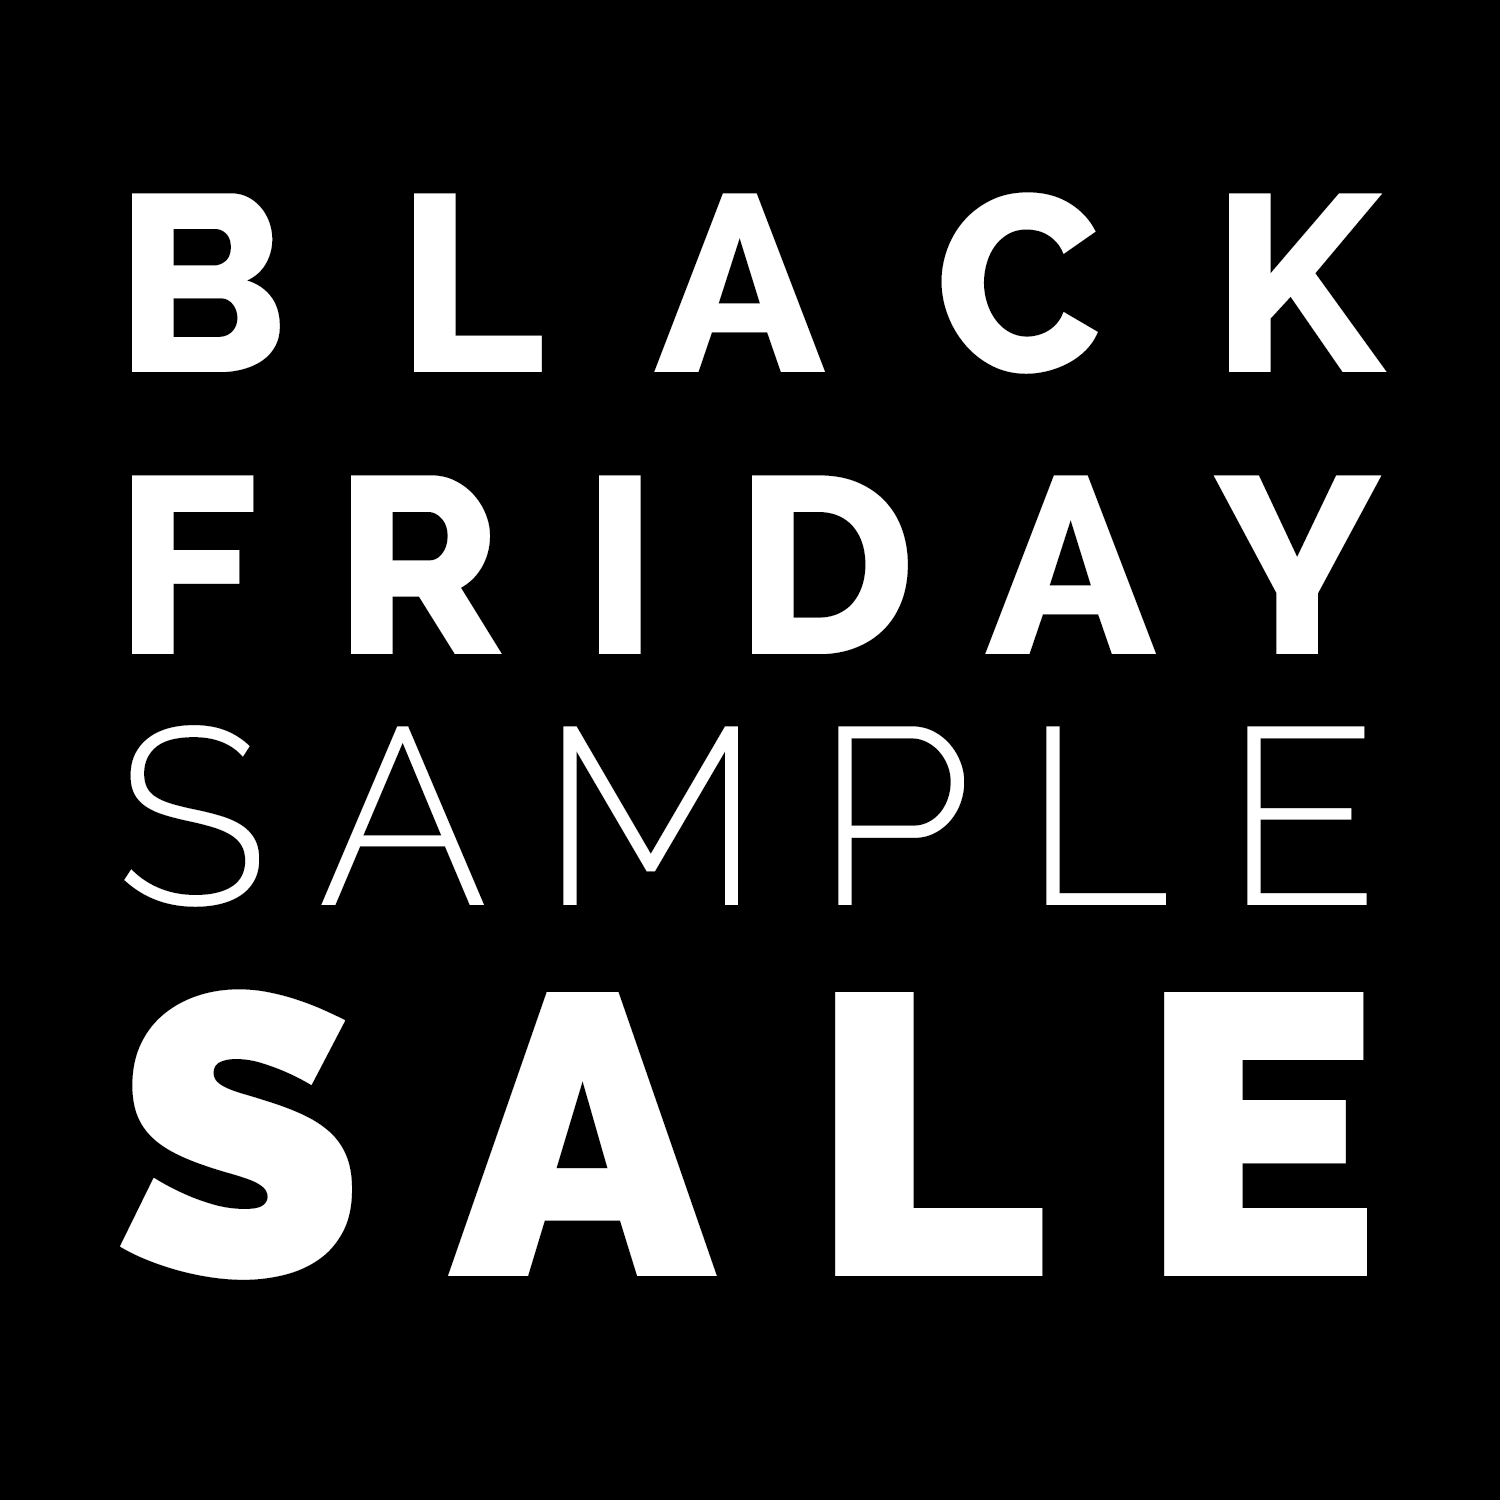 Black Friday Sample Sale